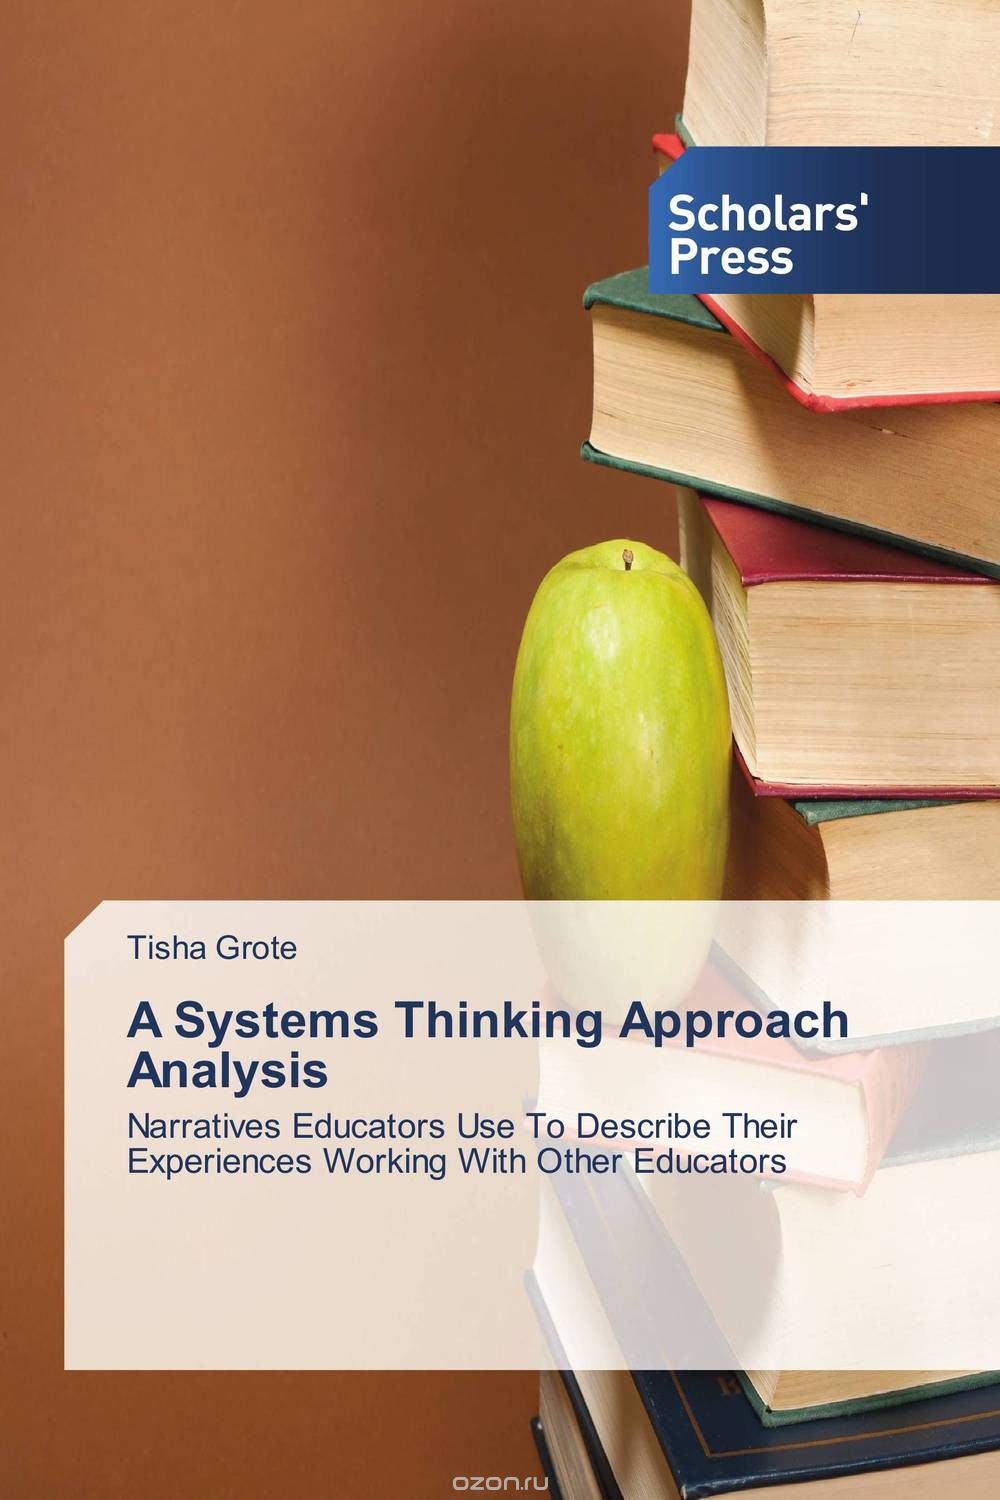 Скачать книгу "A Systems Thinking Approach Analysis"